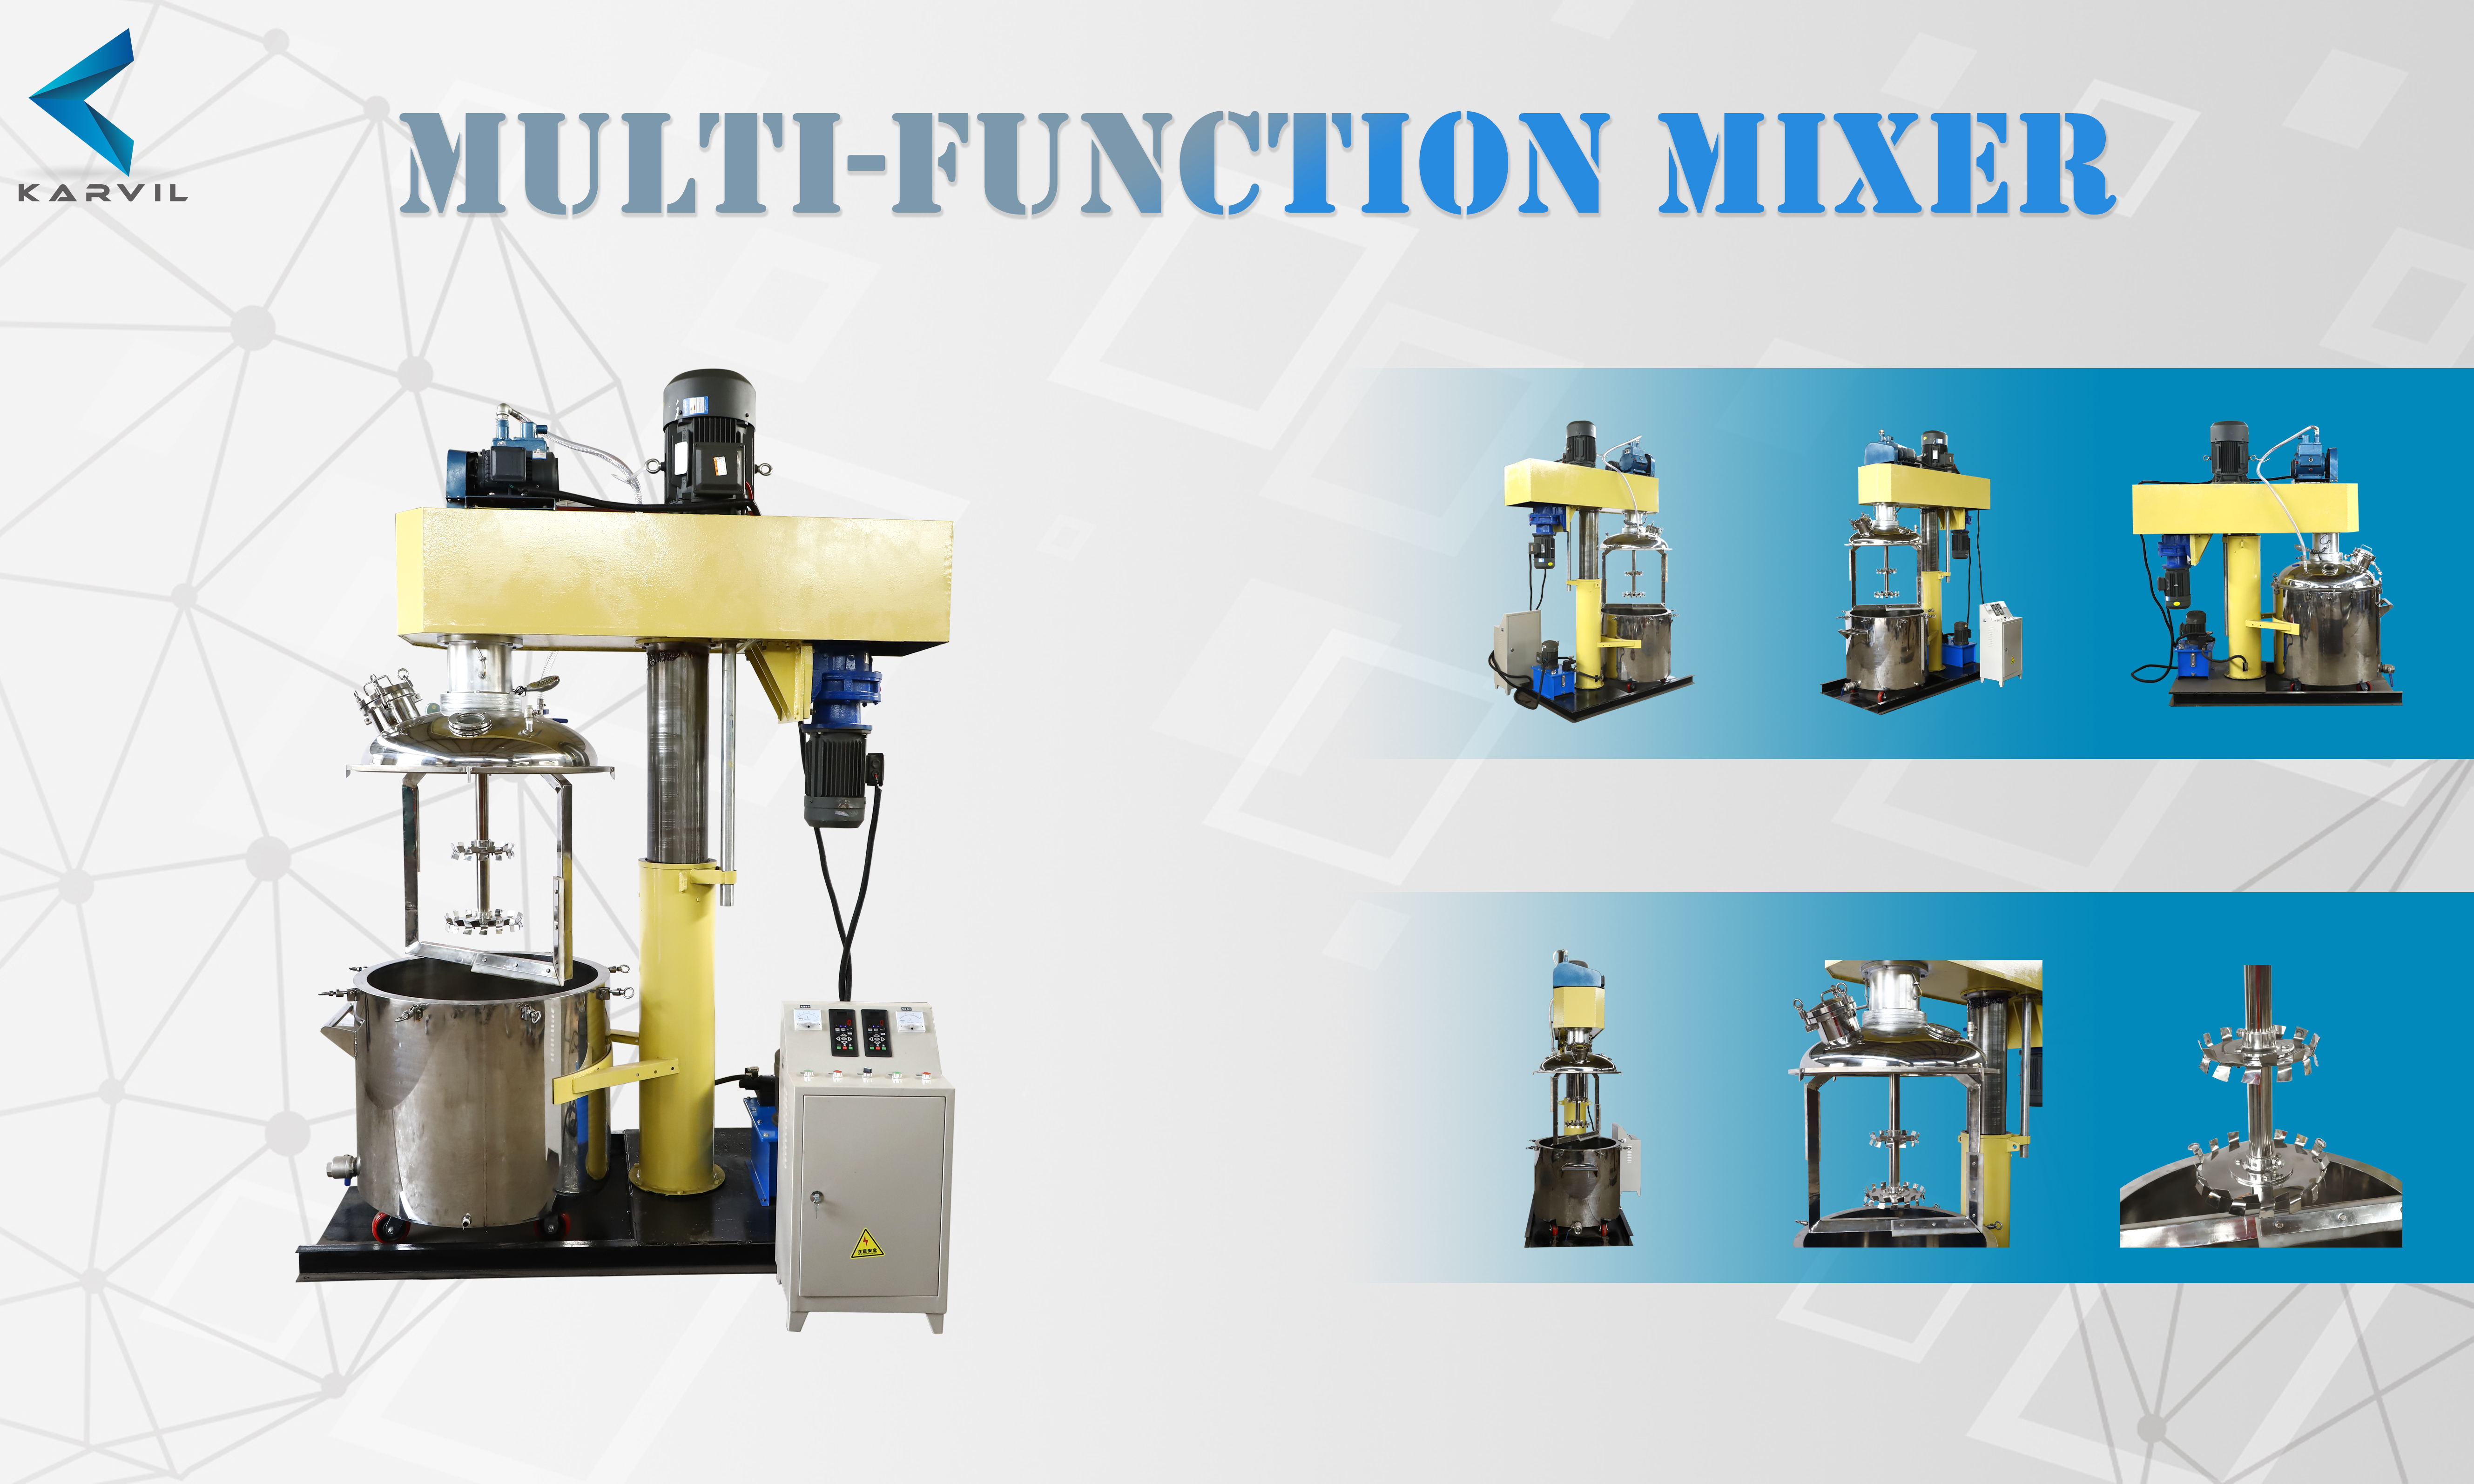 milti-function mixer